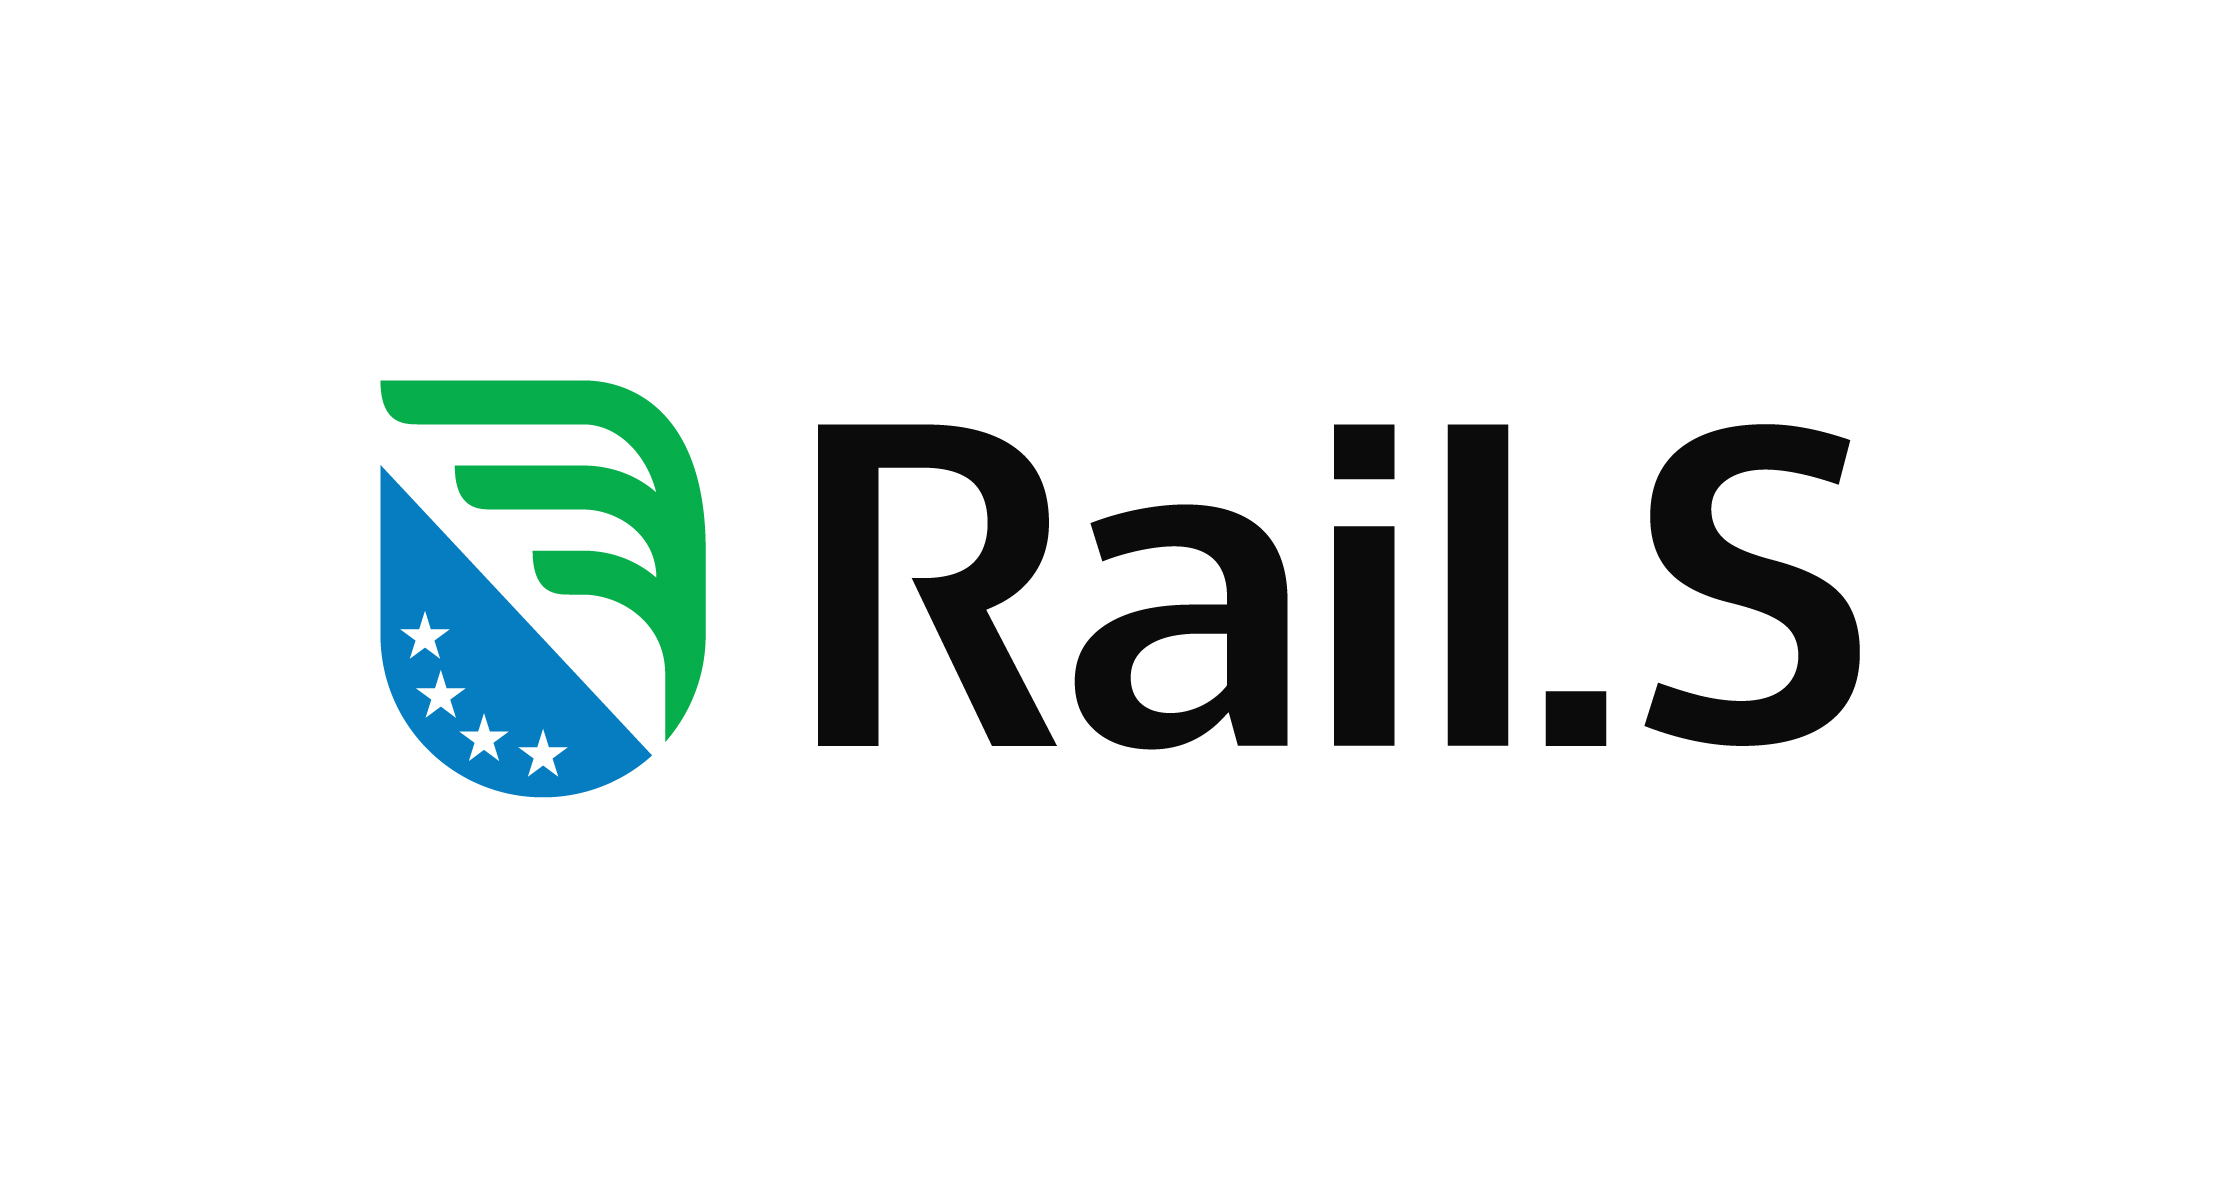 Rail.S Logo